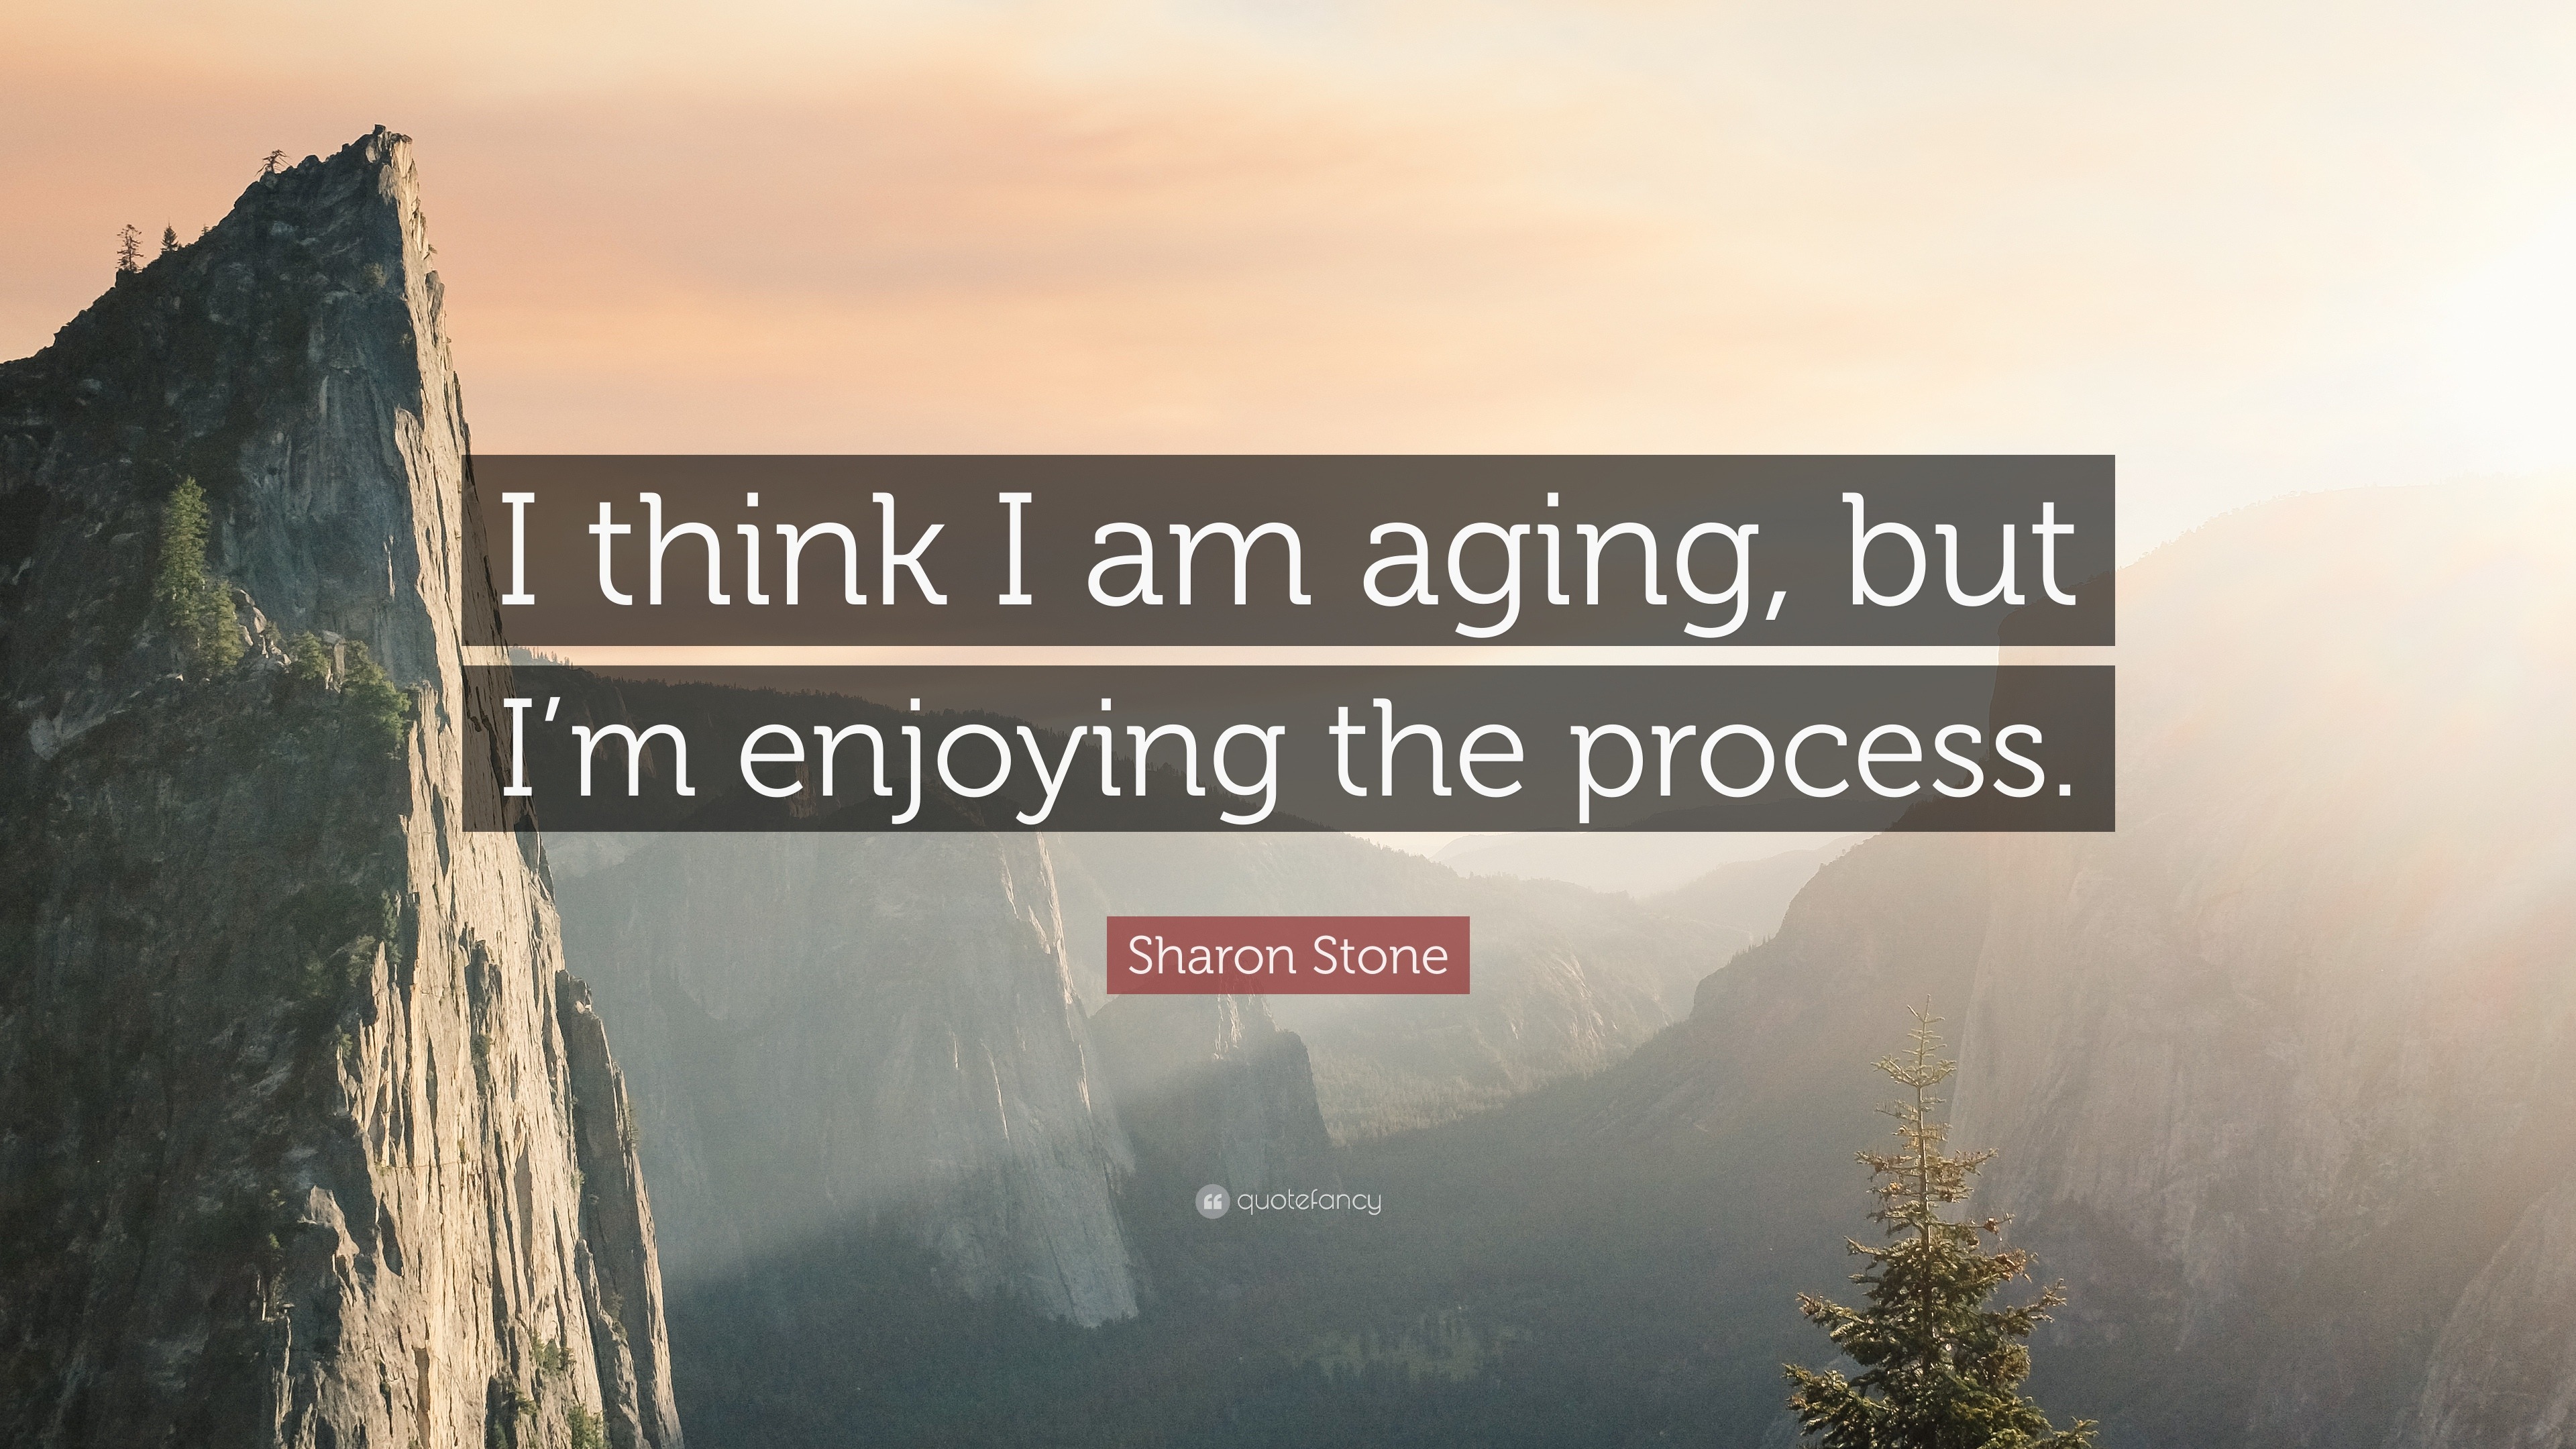 Sharon Stone Quote: “I'm enjoying my years, I'm enjoying my life, I'm  enjoying